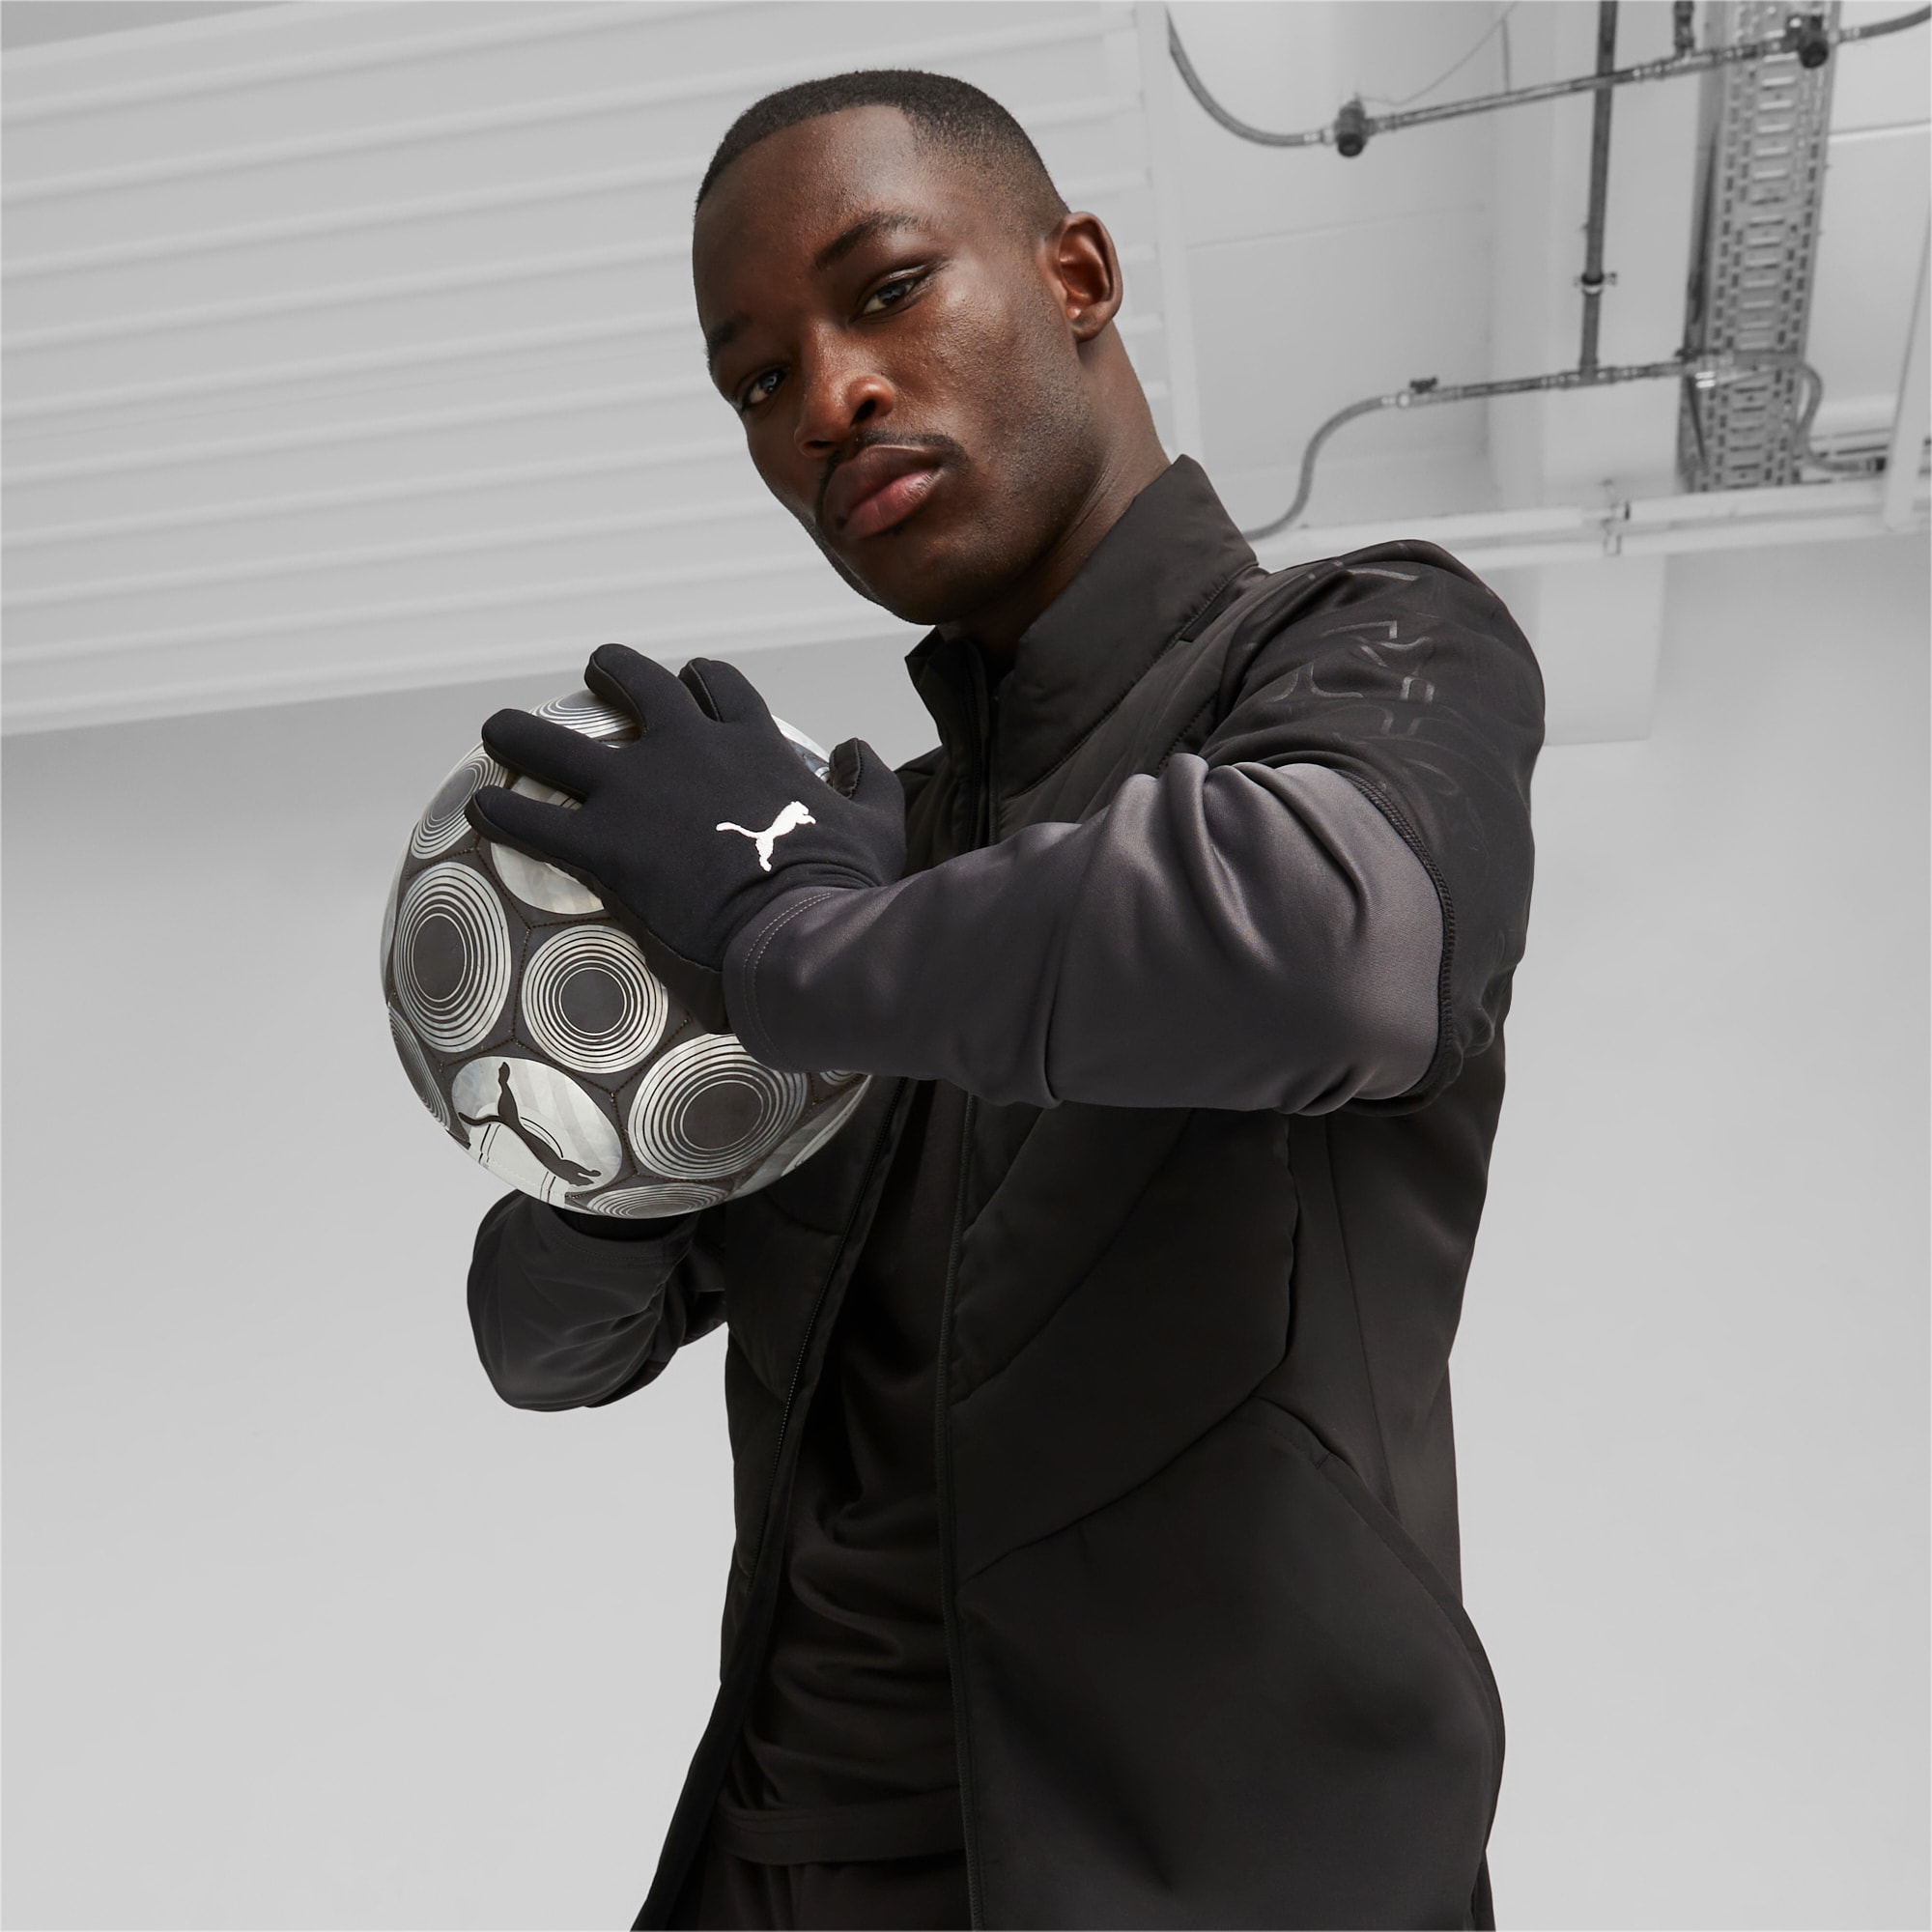 Women's PUMA Individualwinterized Football Gloves, Black/White, Size XL, Accessories